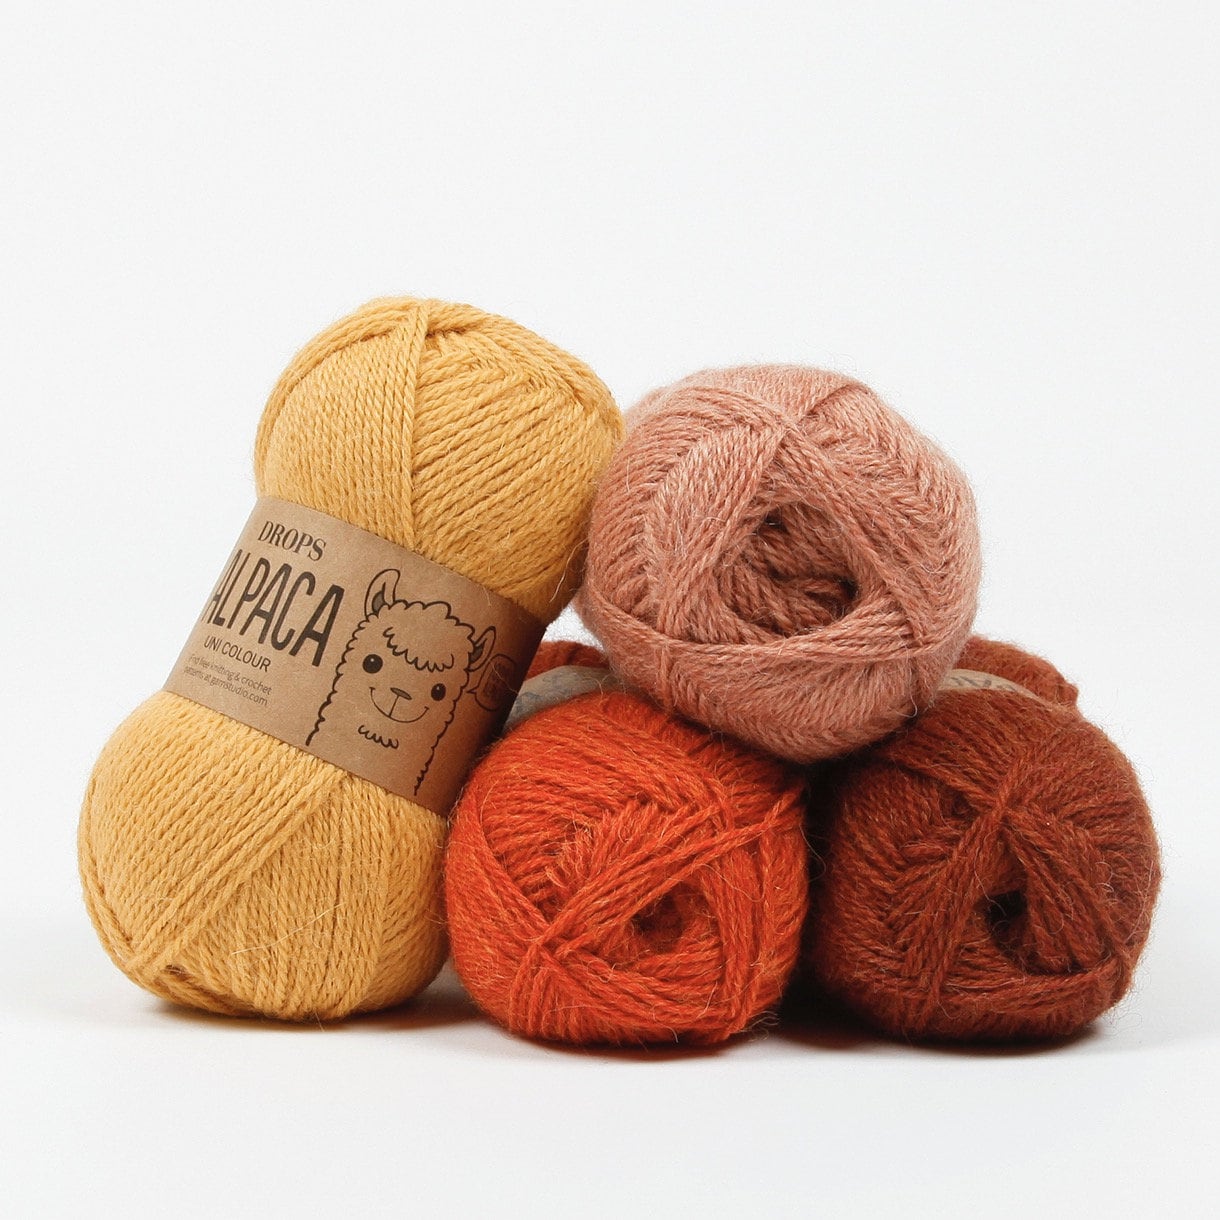 Knitter's Pride Wool Needle Set - Ayarna